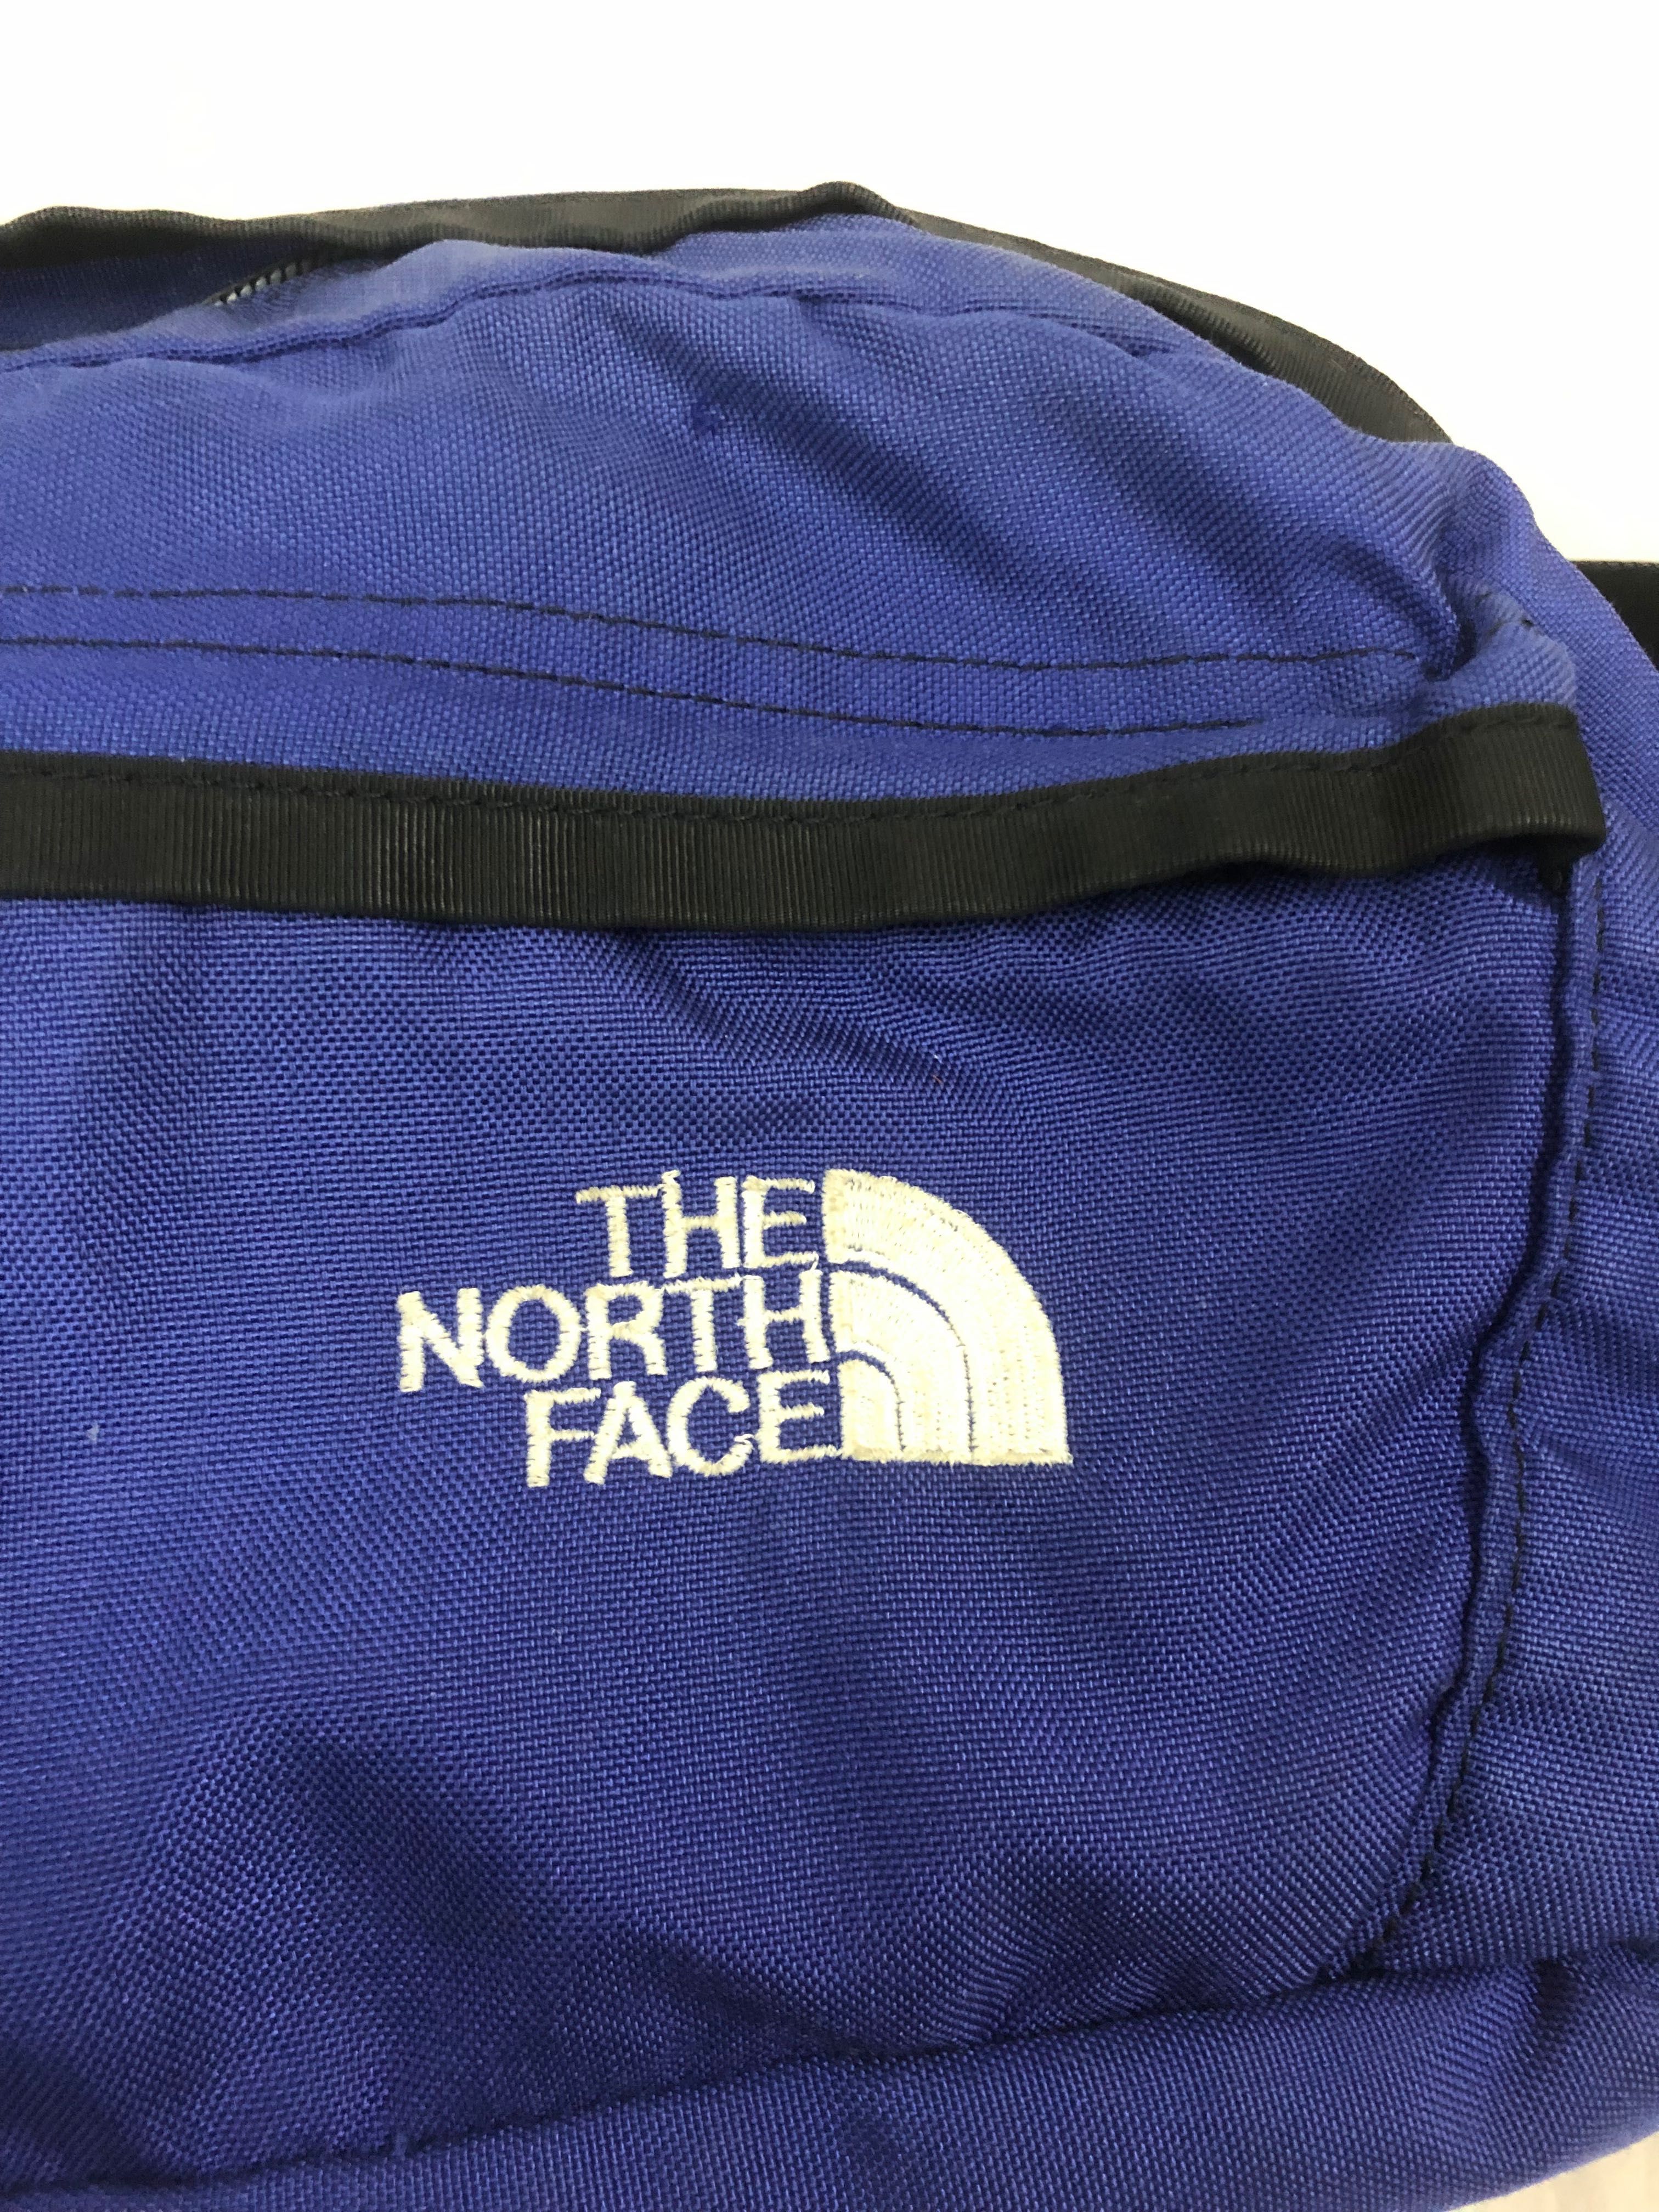 The North Face оригинал/ поясная сумка/ через плечо / бананка, винтаж